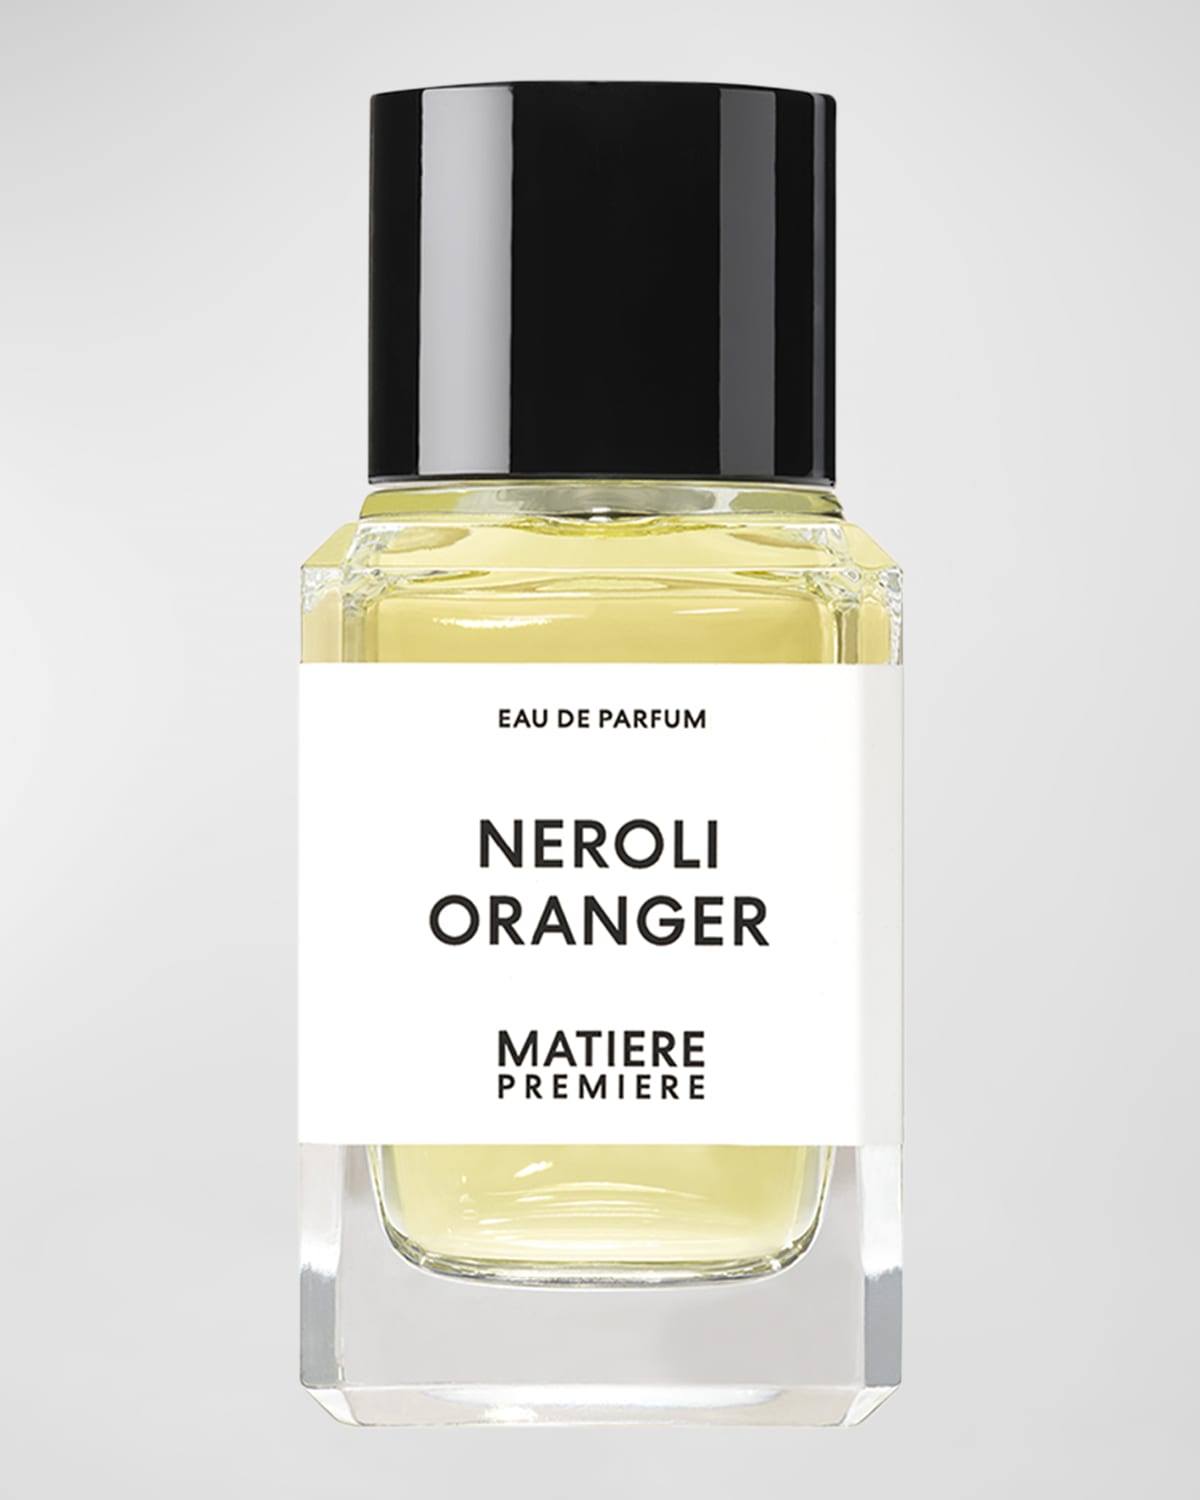 Neroli Oranger Eau de Parfum, 3.4 oz.